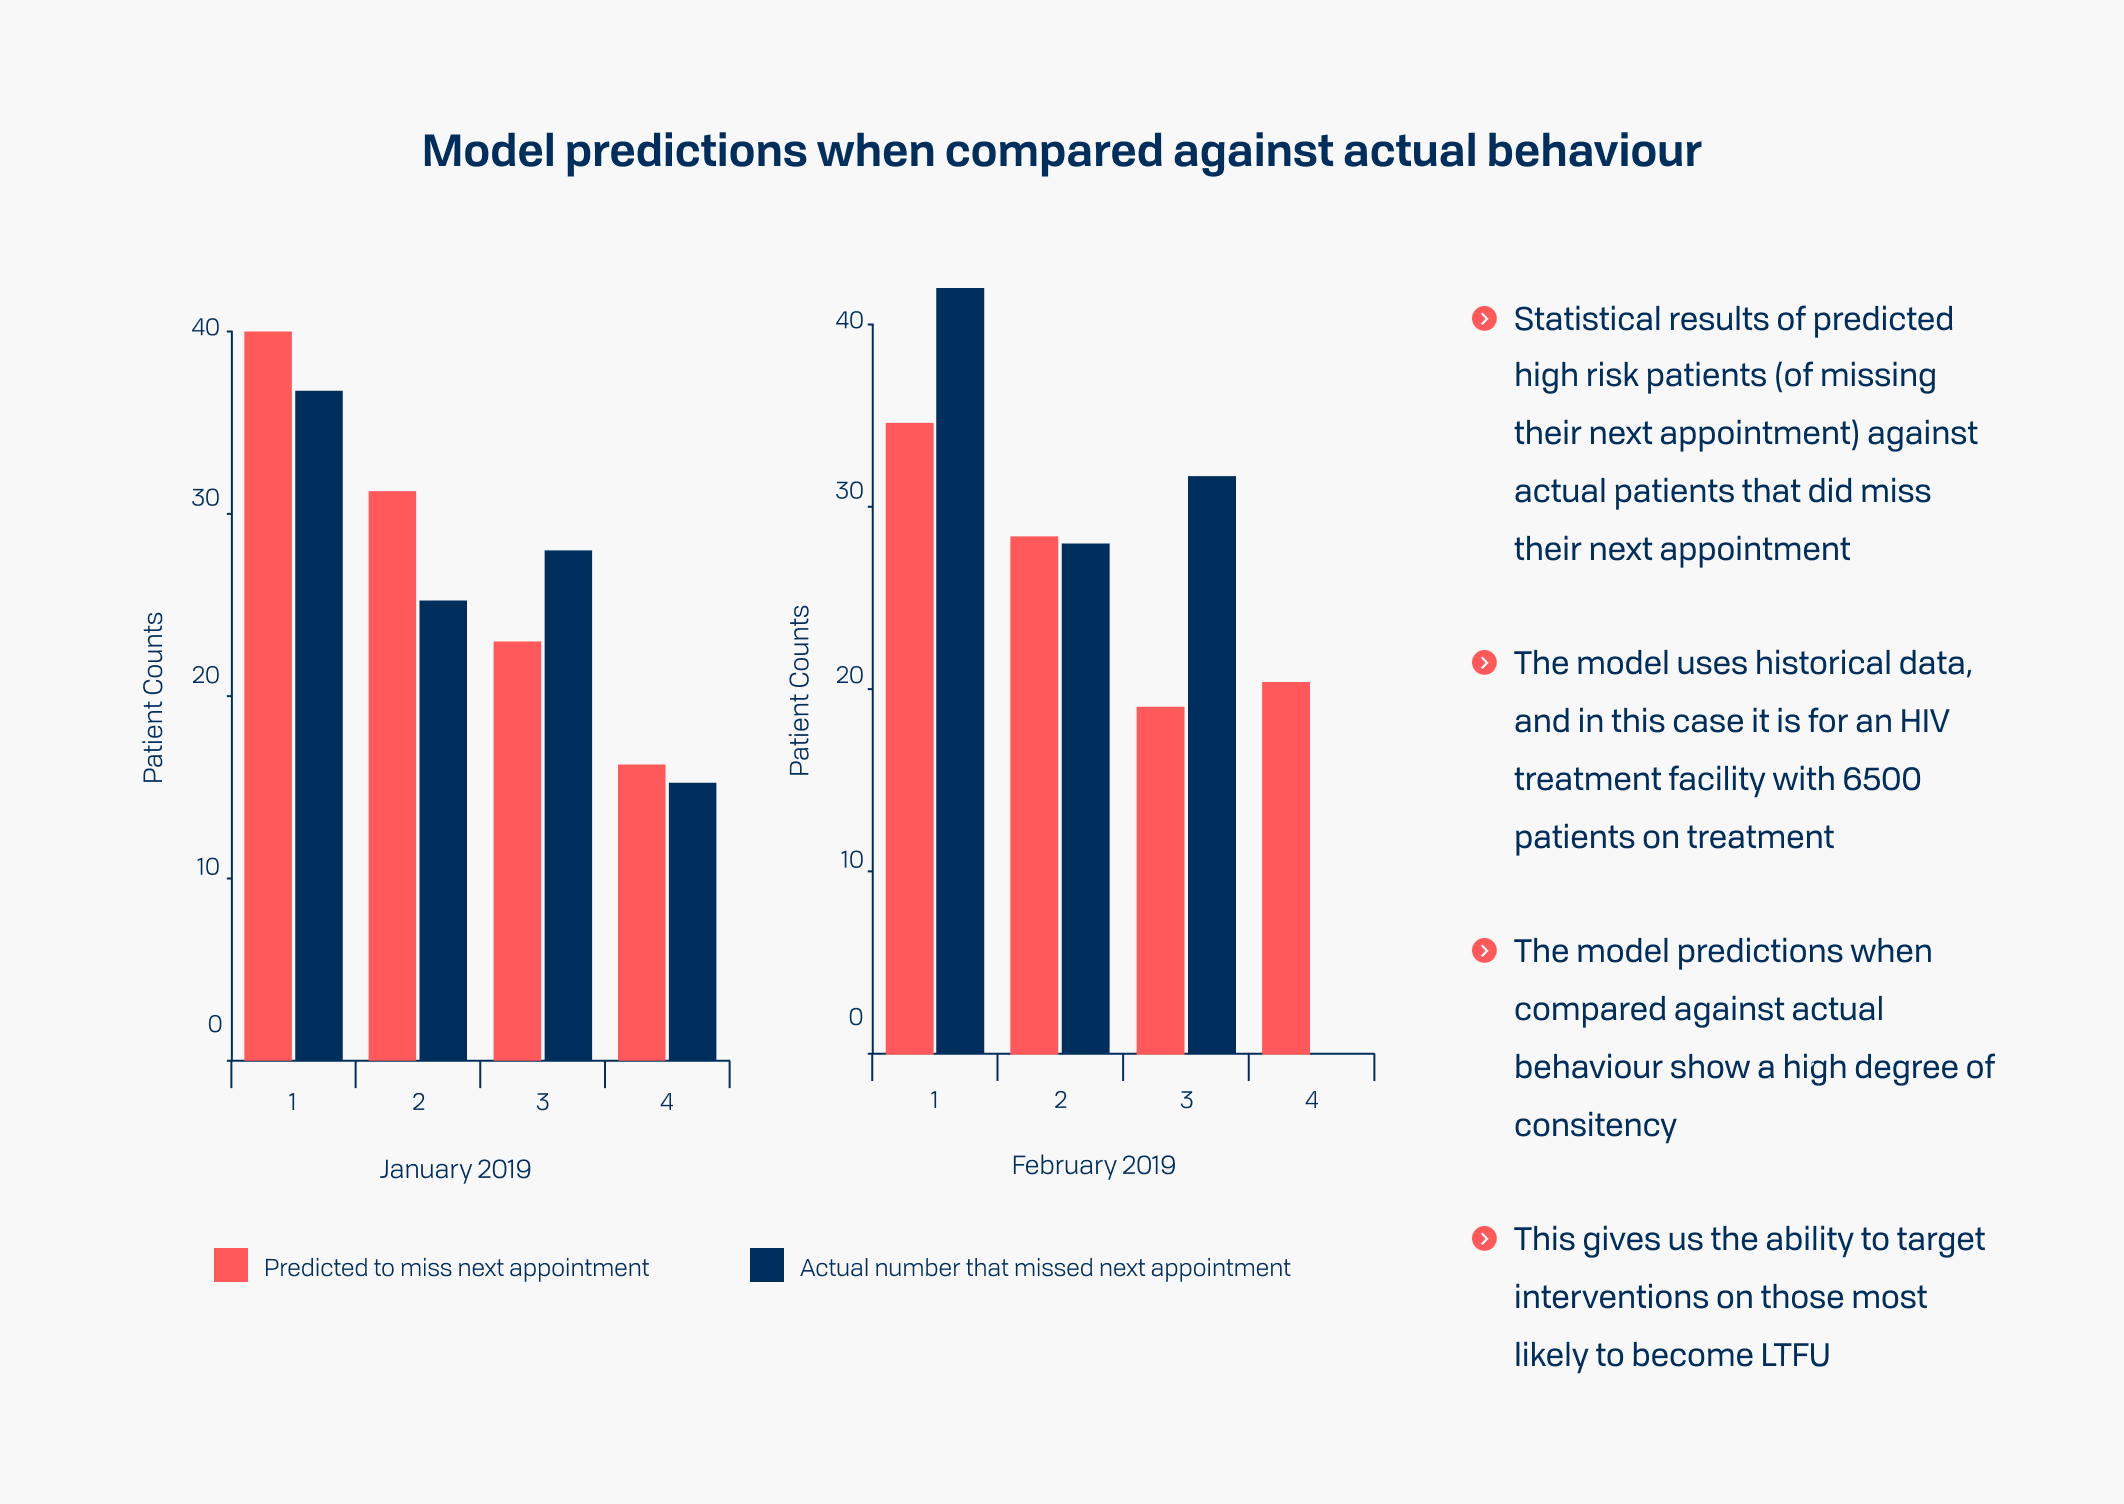 Model predictions when compared to actual behaviour